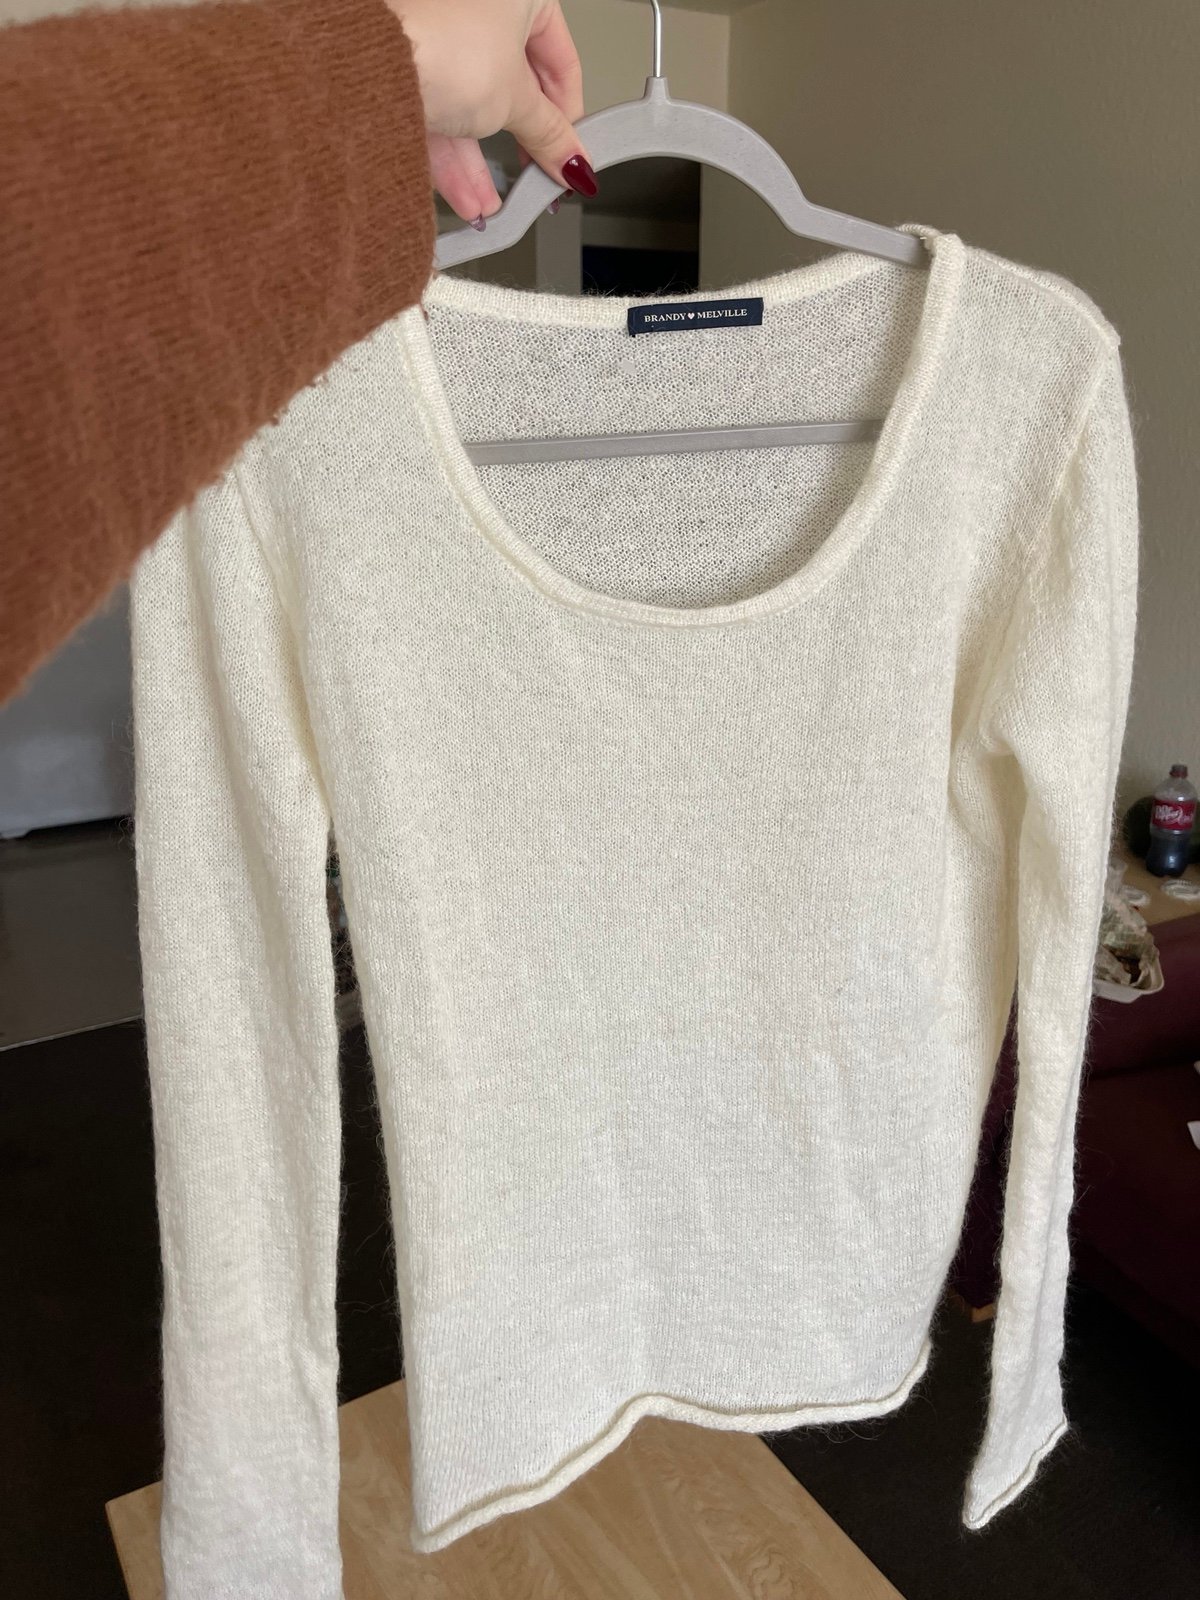 reasonable price Brandy Melville sweater Ogzl3vgol Hot Sale